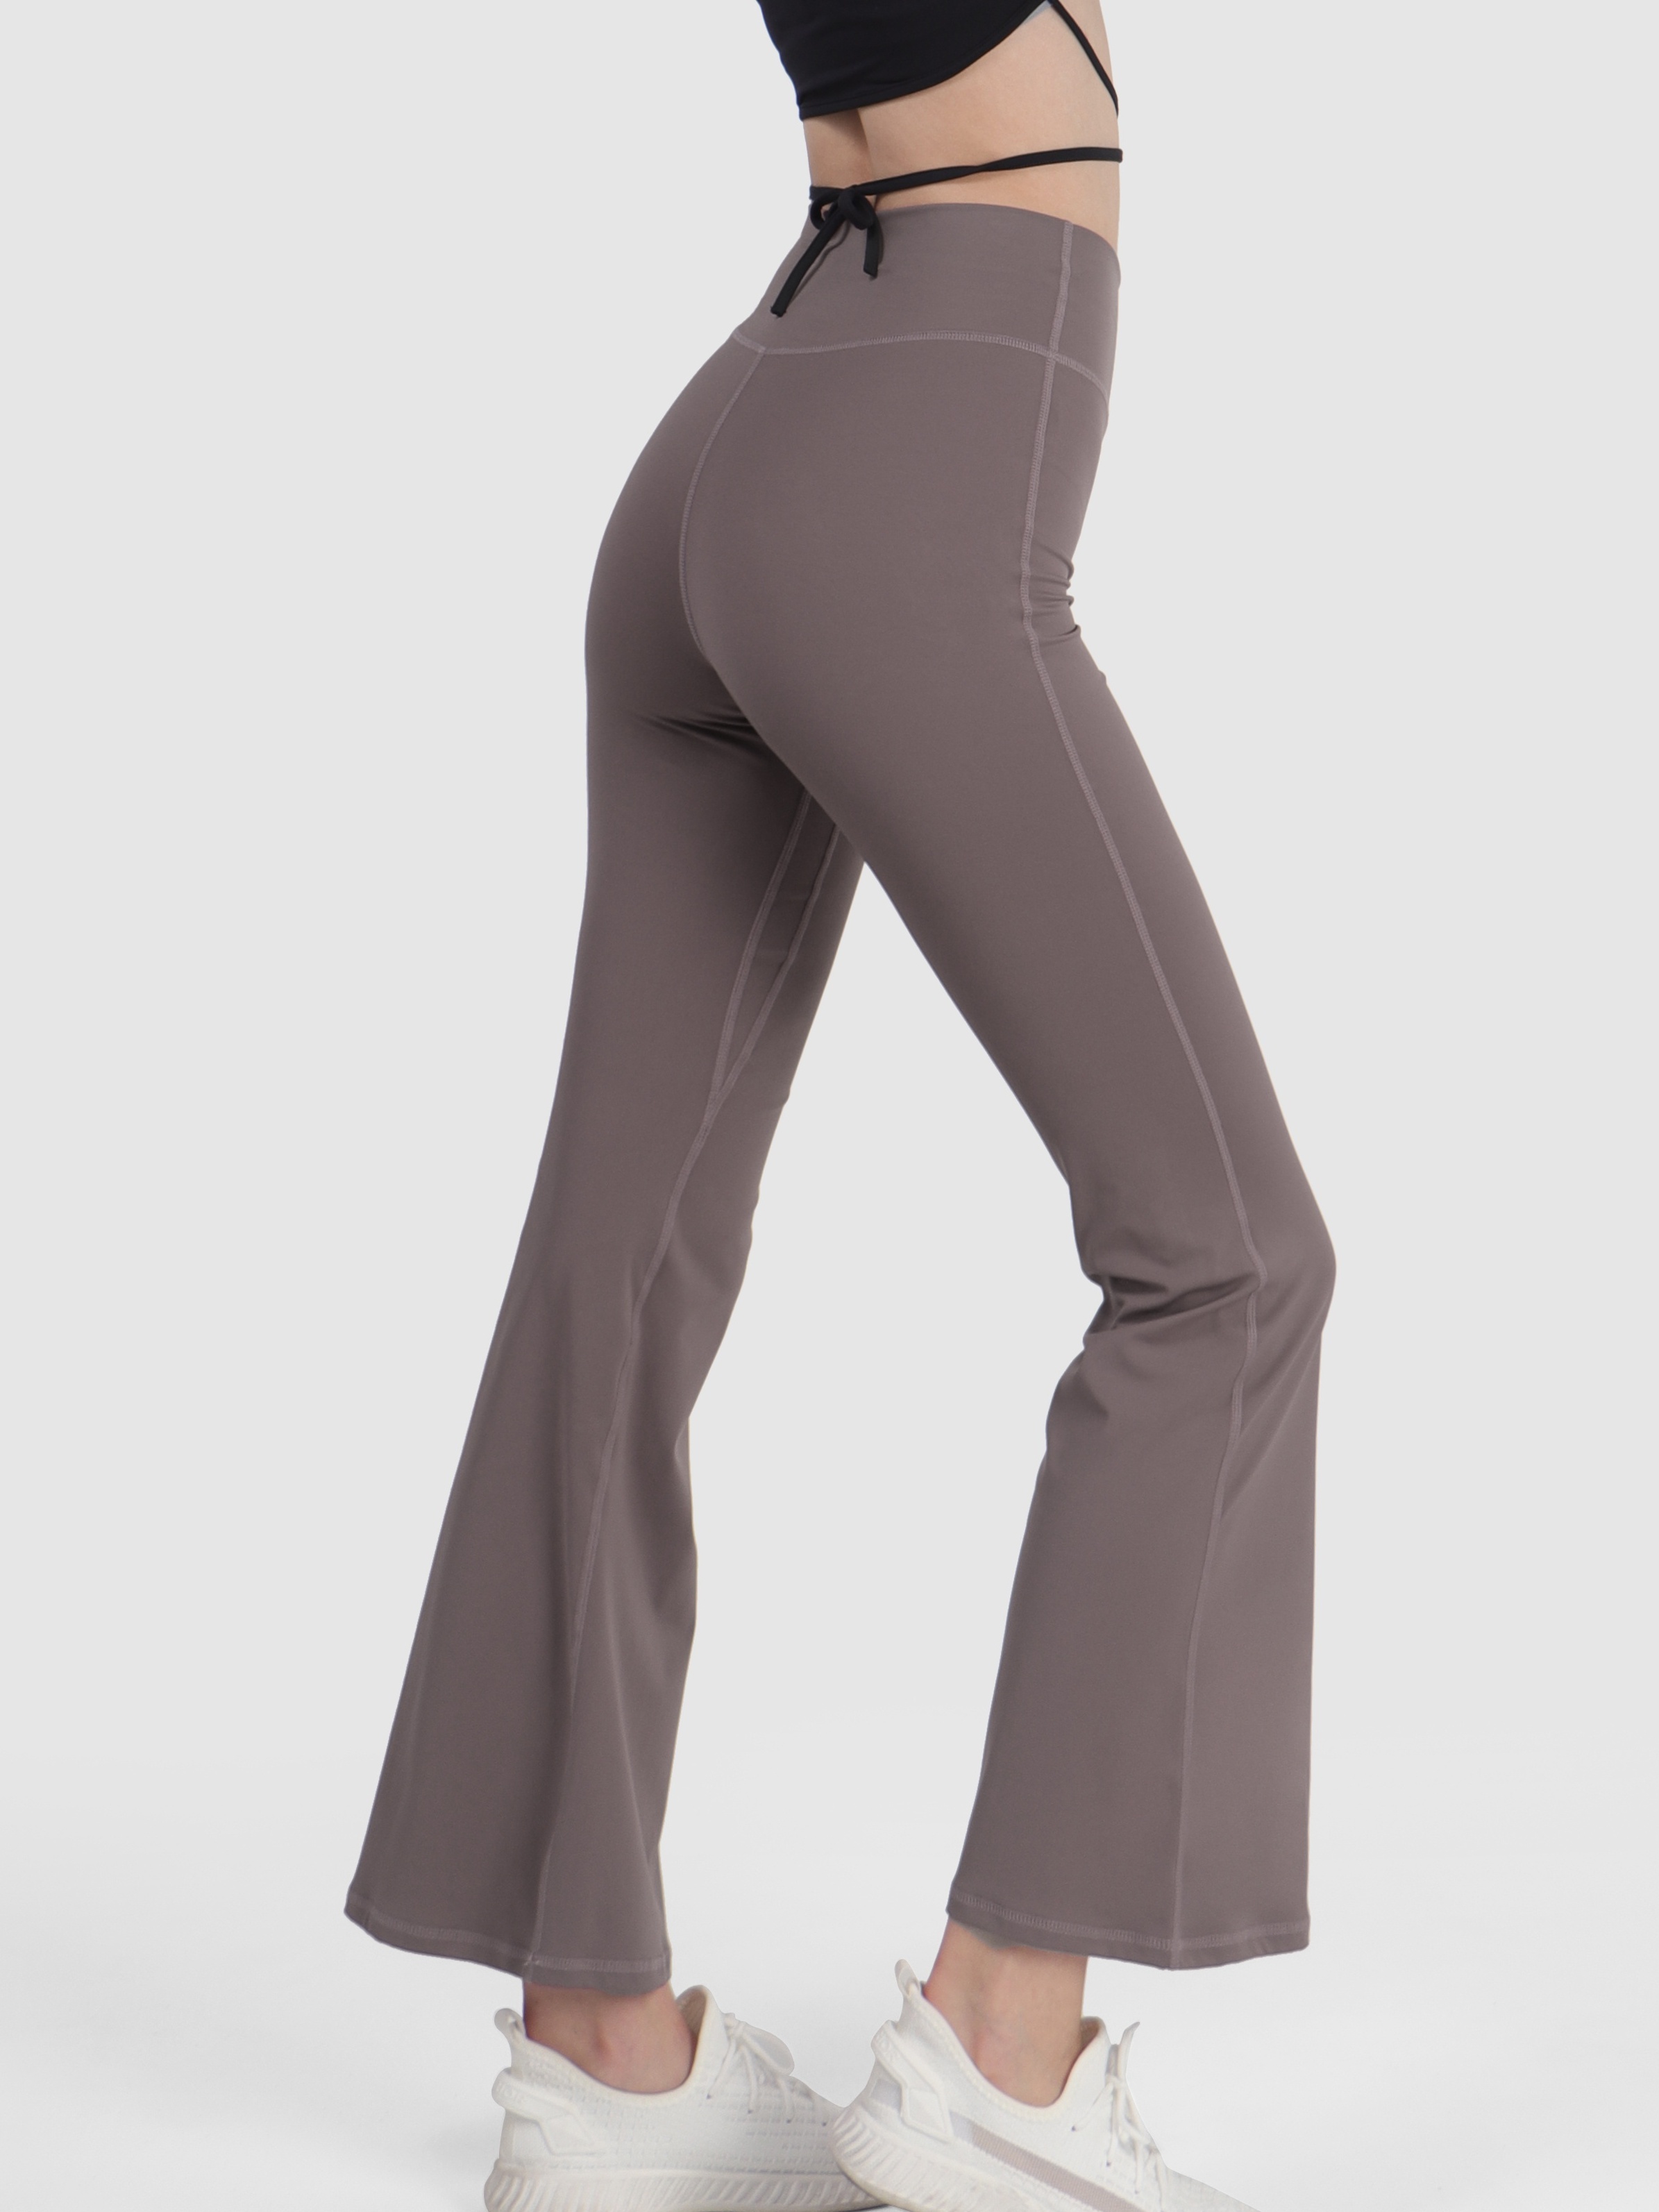 FELEMO Women's Bootcut Yoga Pants High Waist Workout Pants 4 Way Stretch Tummy  Control Work Pants Flare Pants（Navy/XL） 